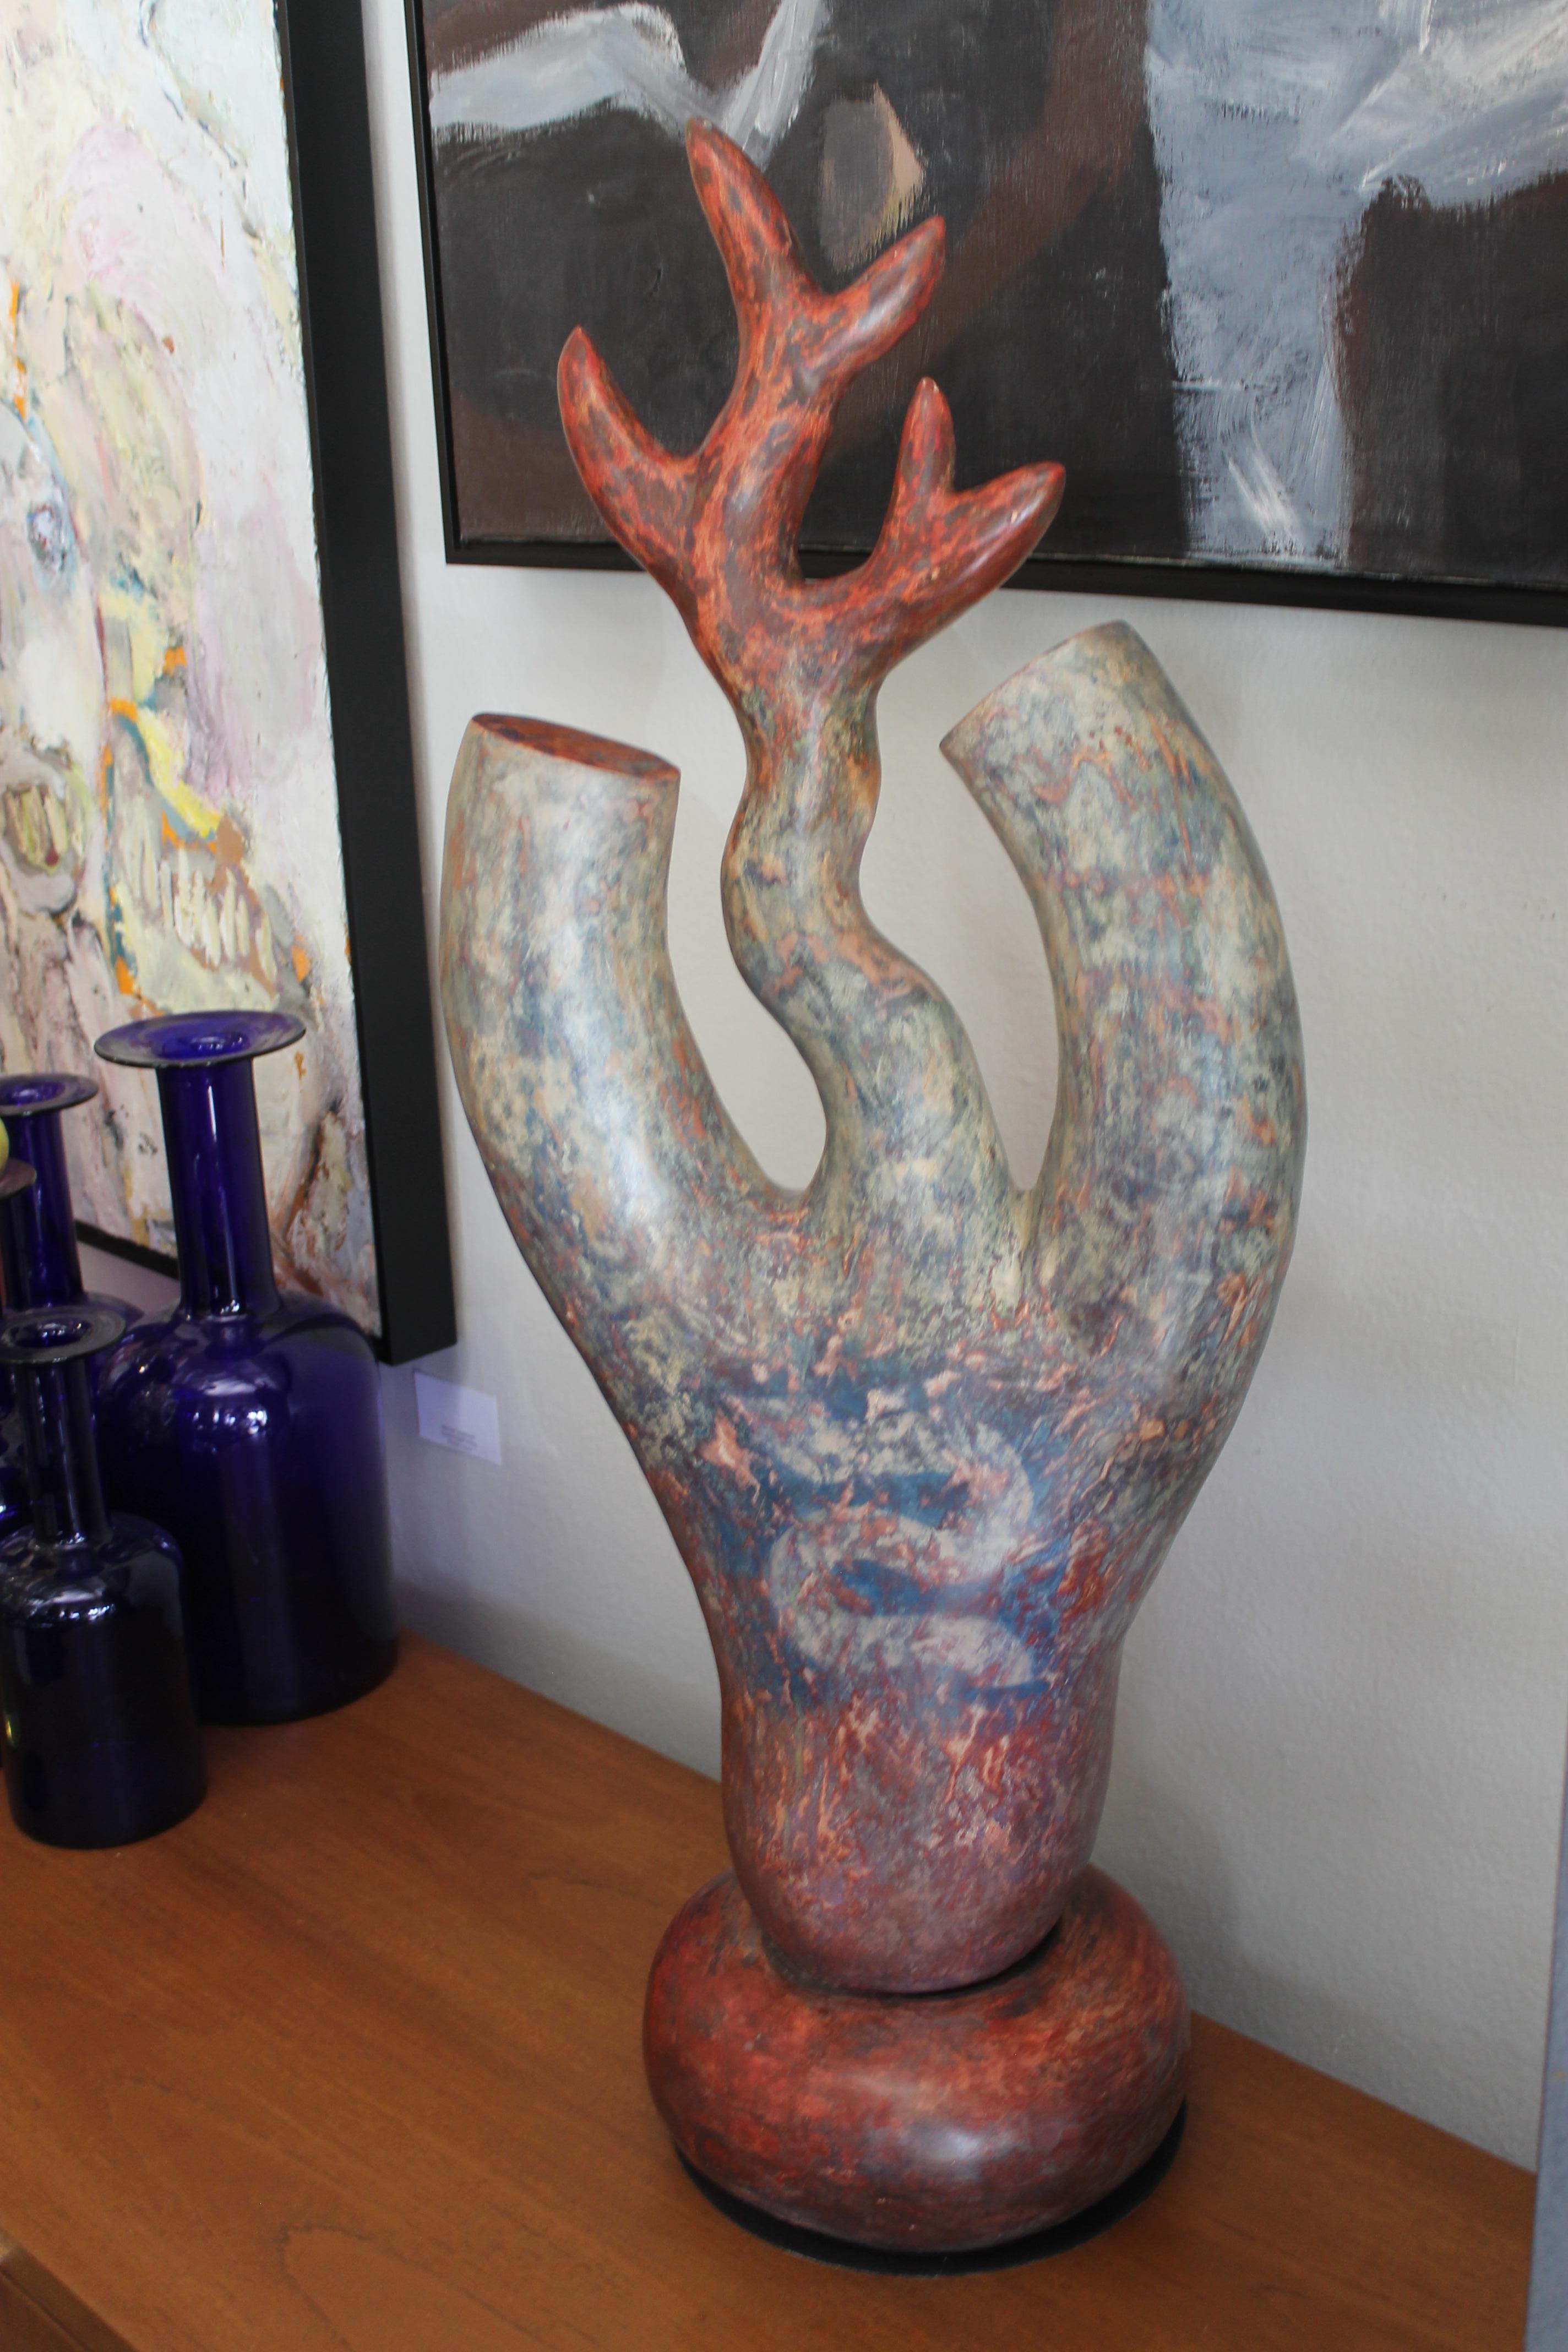 Sculpture en céramique avec un motif de serpent de James Kouretas (1947-2016). La sculpture mesure 14